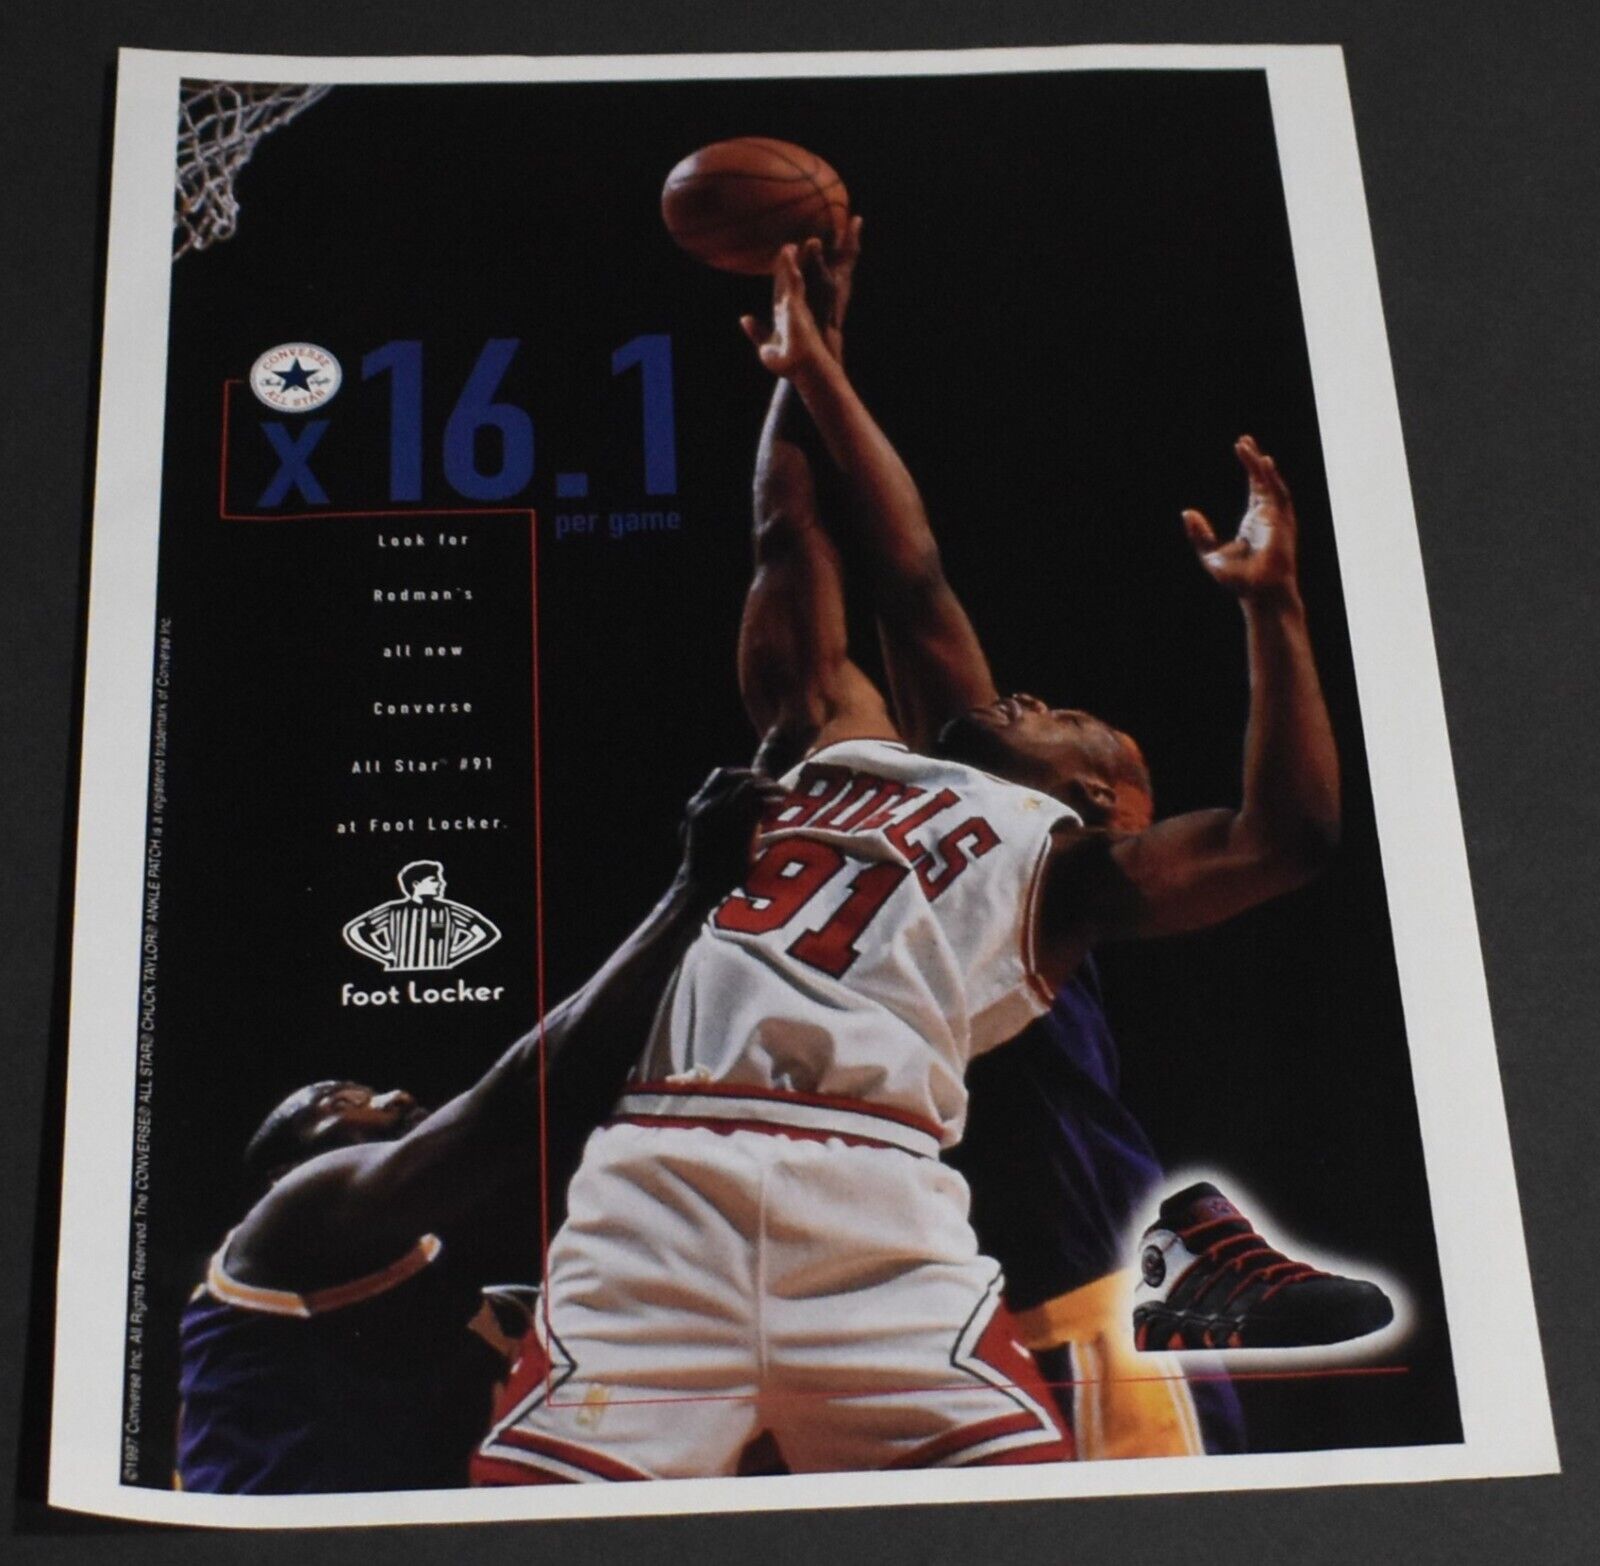 1997 Print Ad Chicago Bulls Dennis Rodman Basketball Rebound NBA Foot Locker art